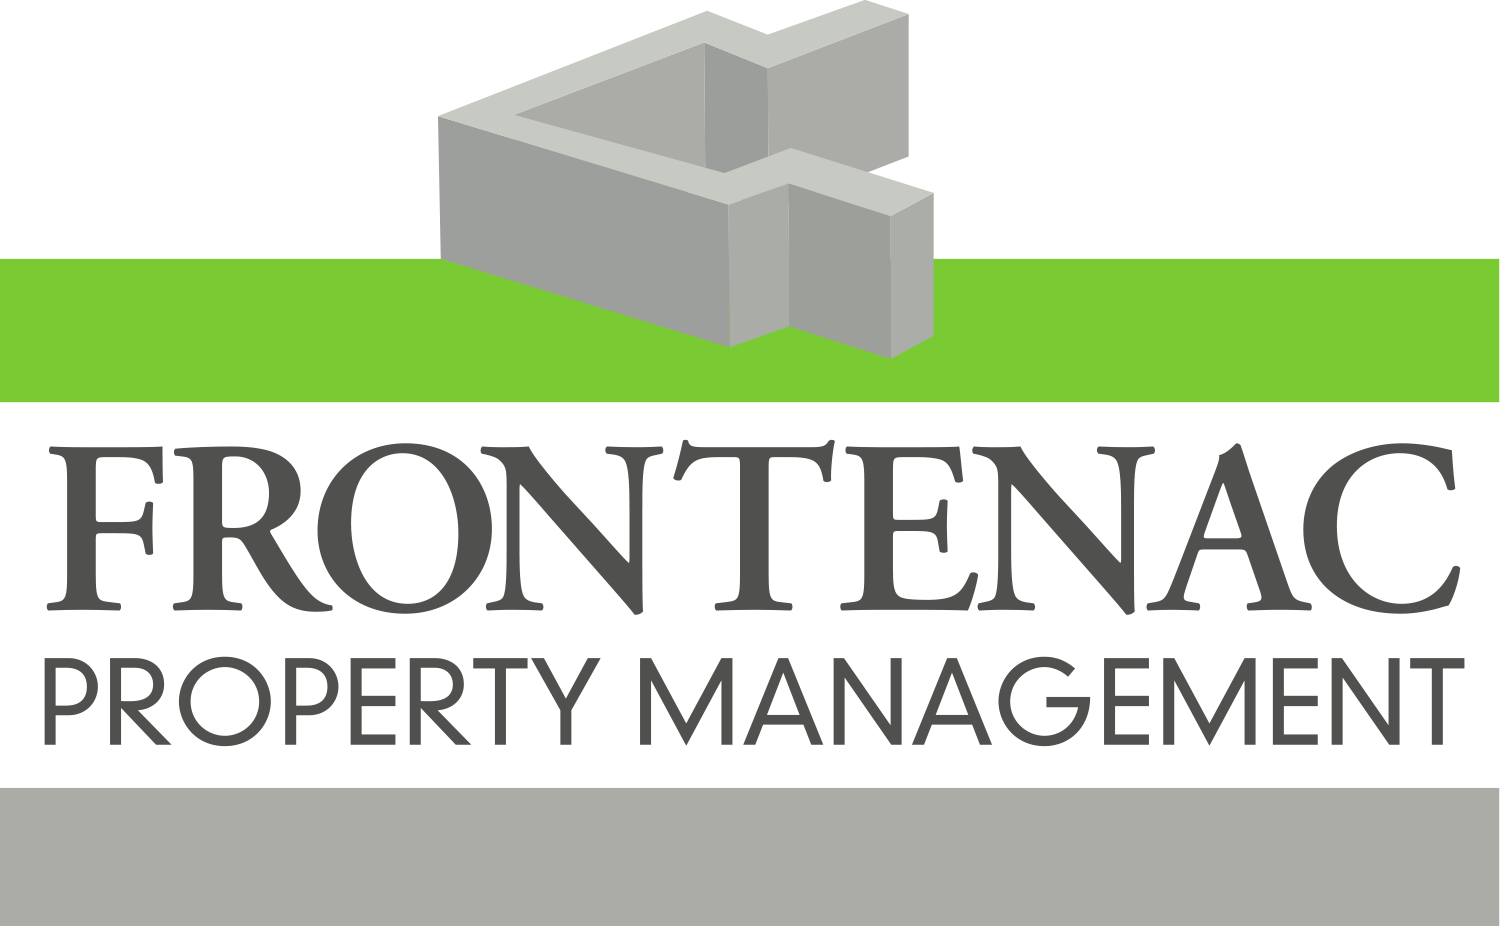 Frontenac Property Management